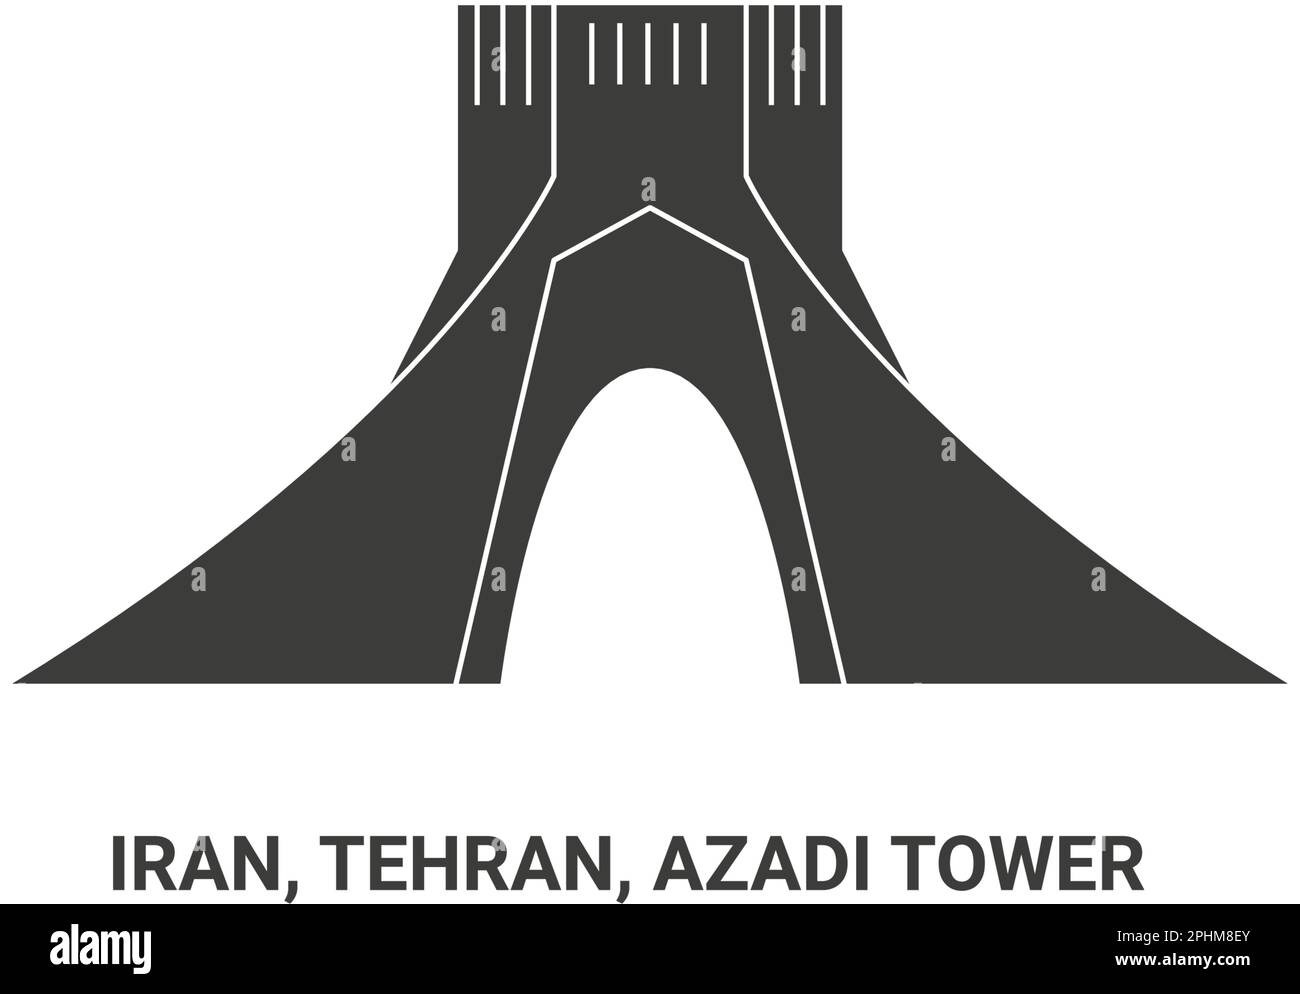 Iran, Tehran, Azadi Tower, travel landmark vector illustration Stock Vector